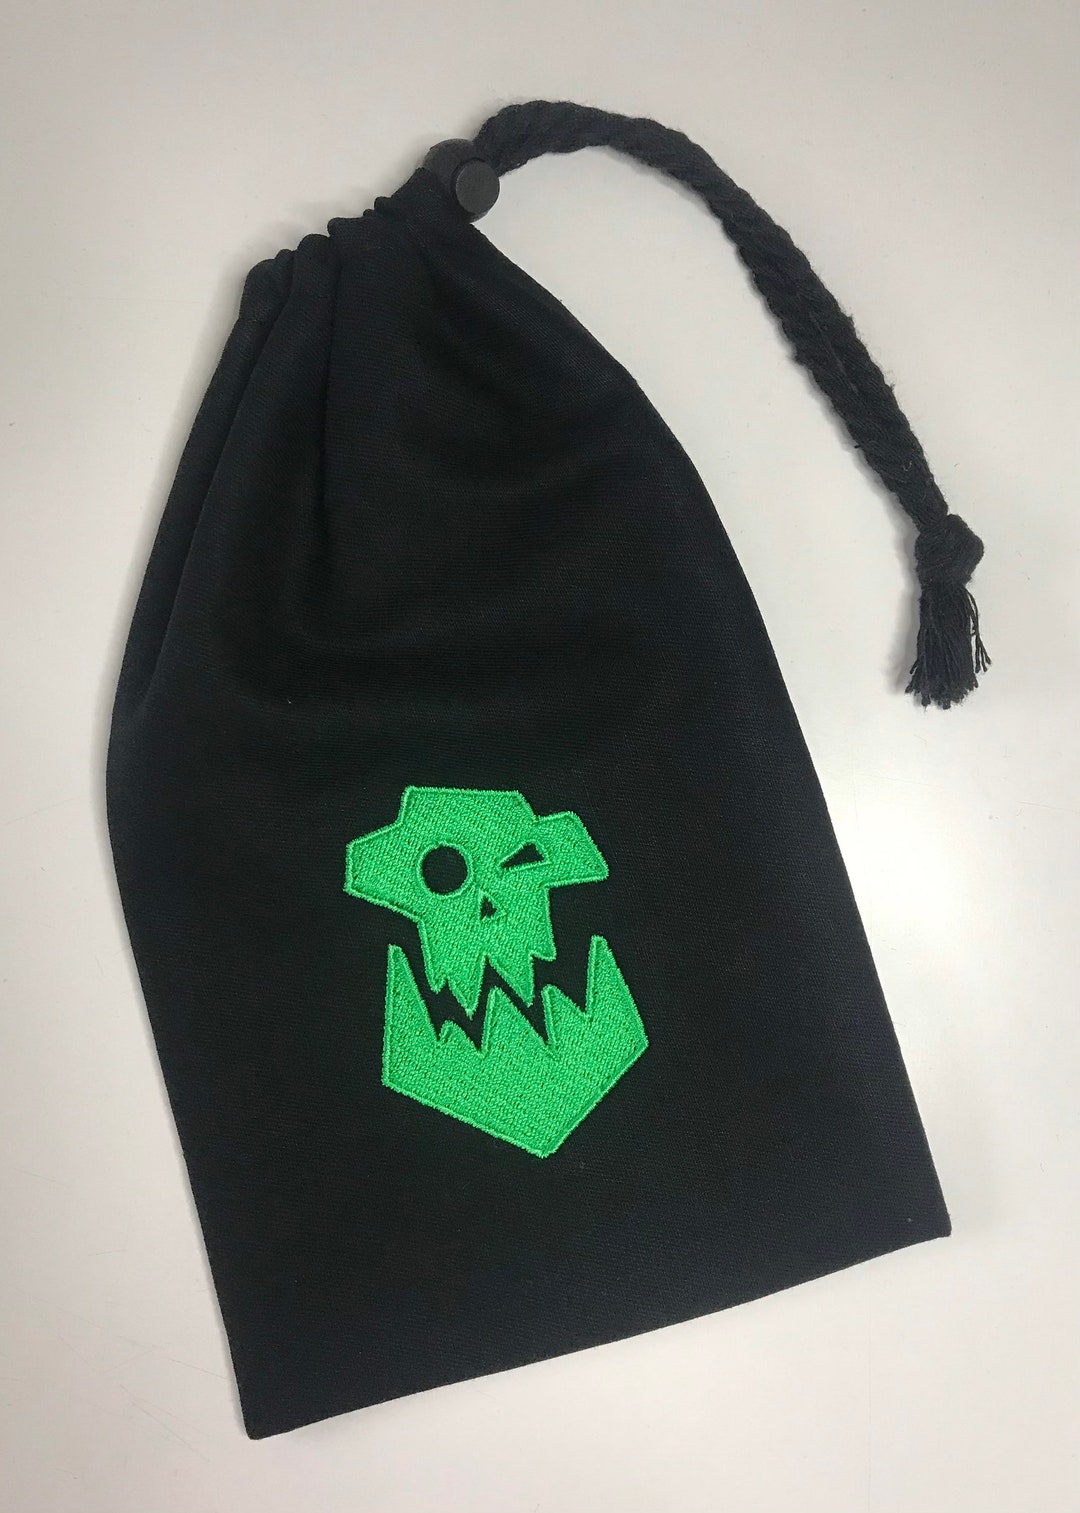 Ork Army Black Dice Bag Embroidered Symbol - Etsy